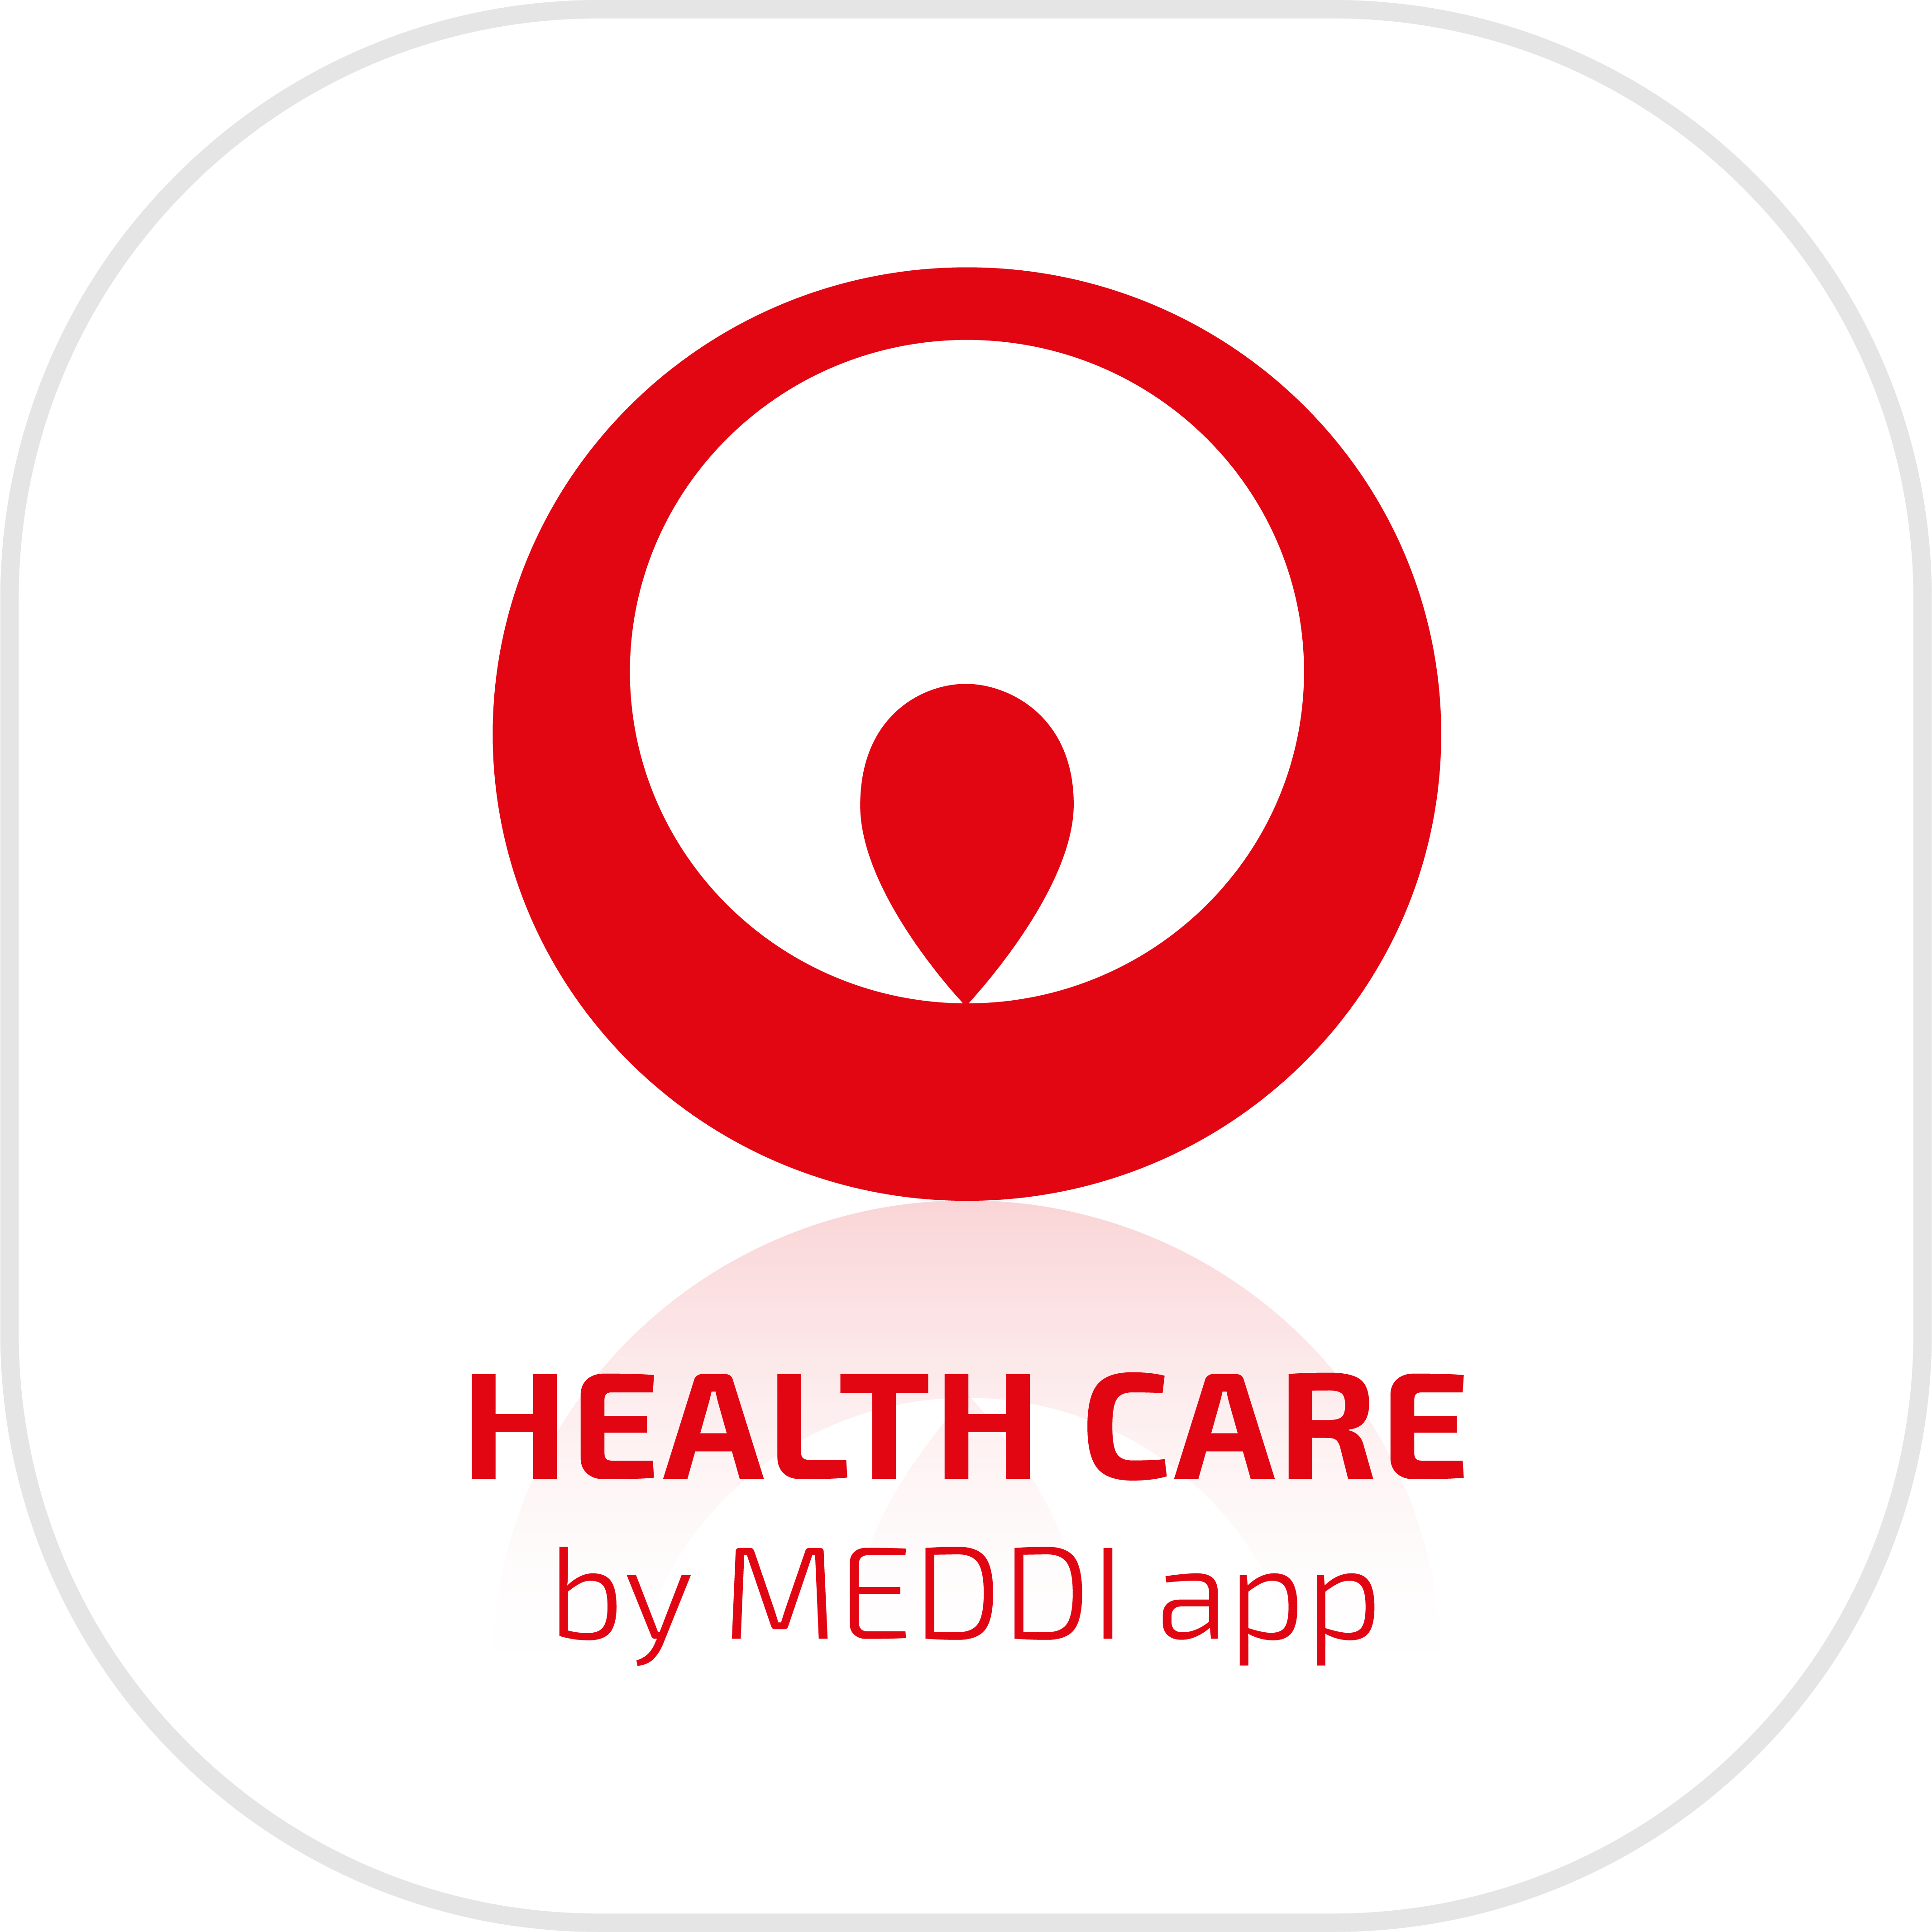 Veolia health care by MEDDI